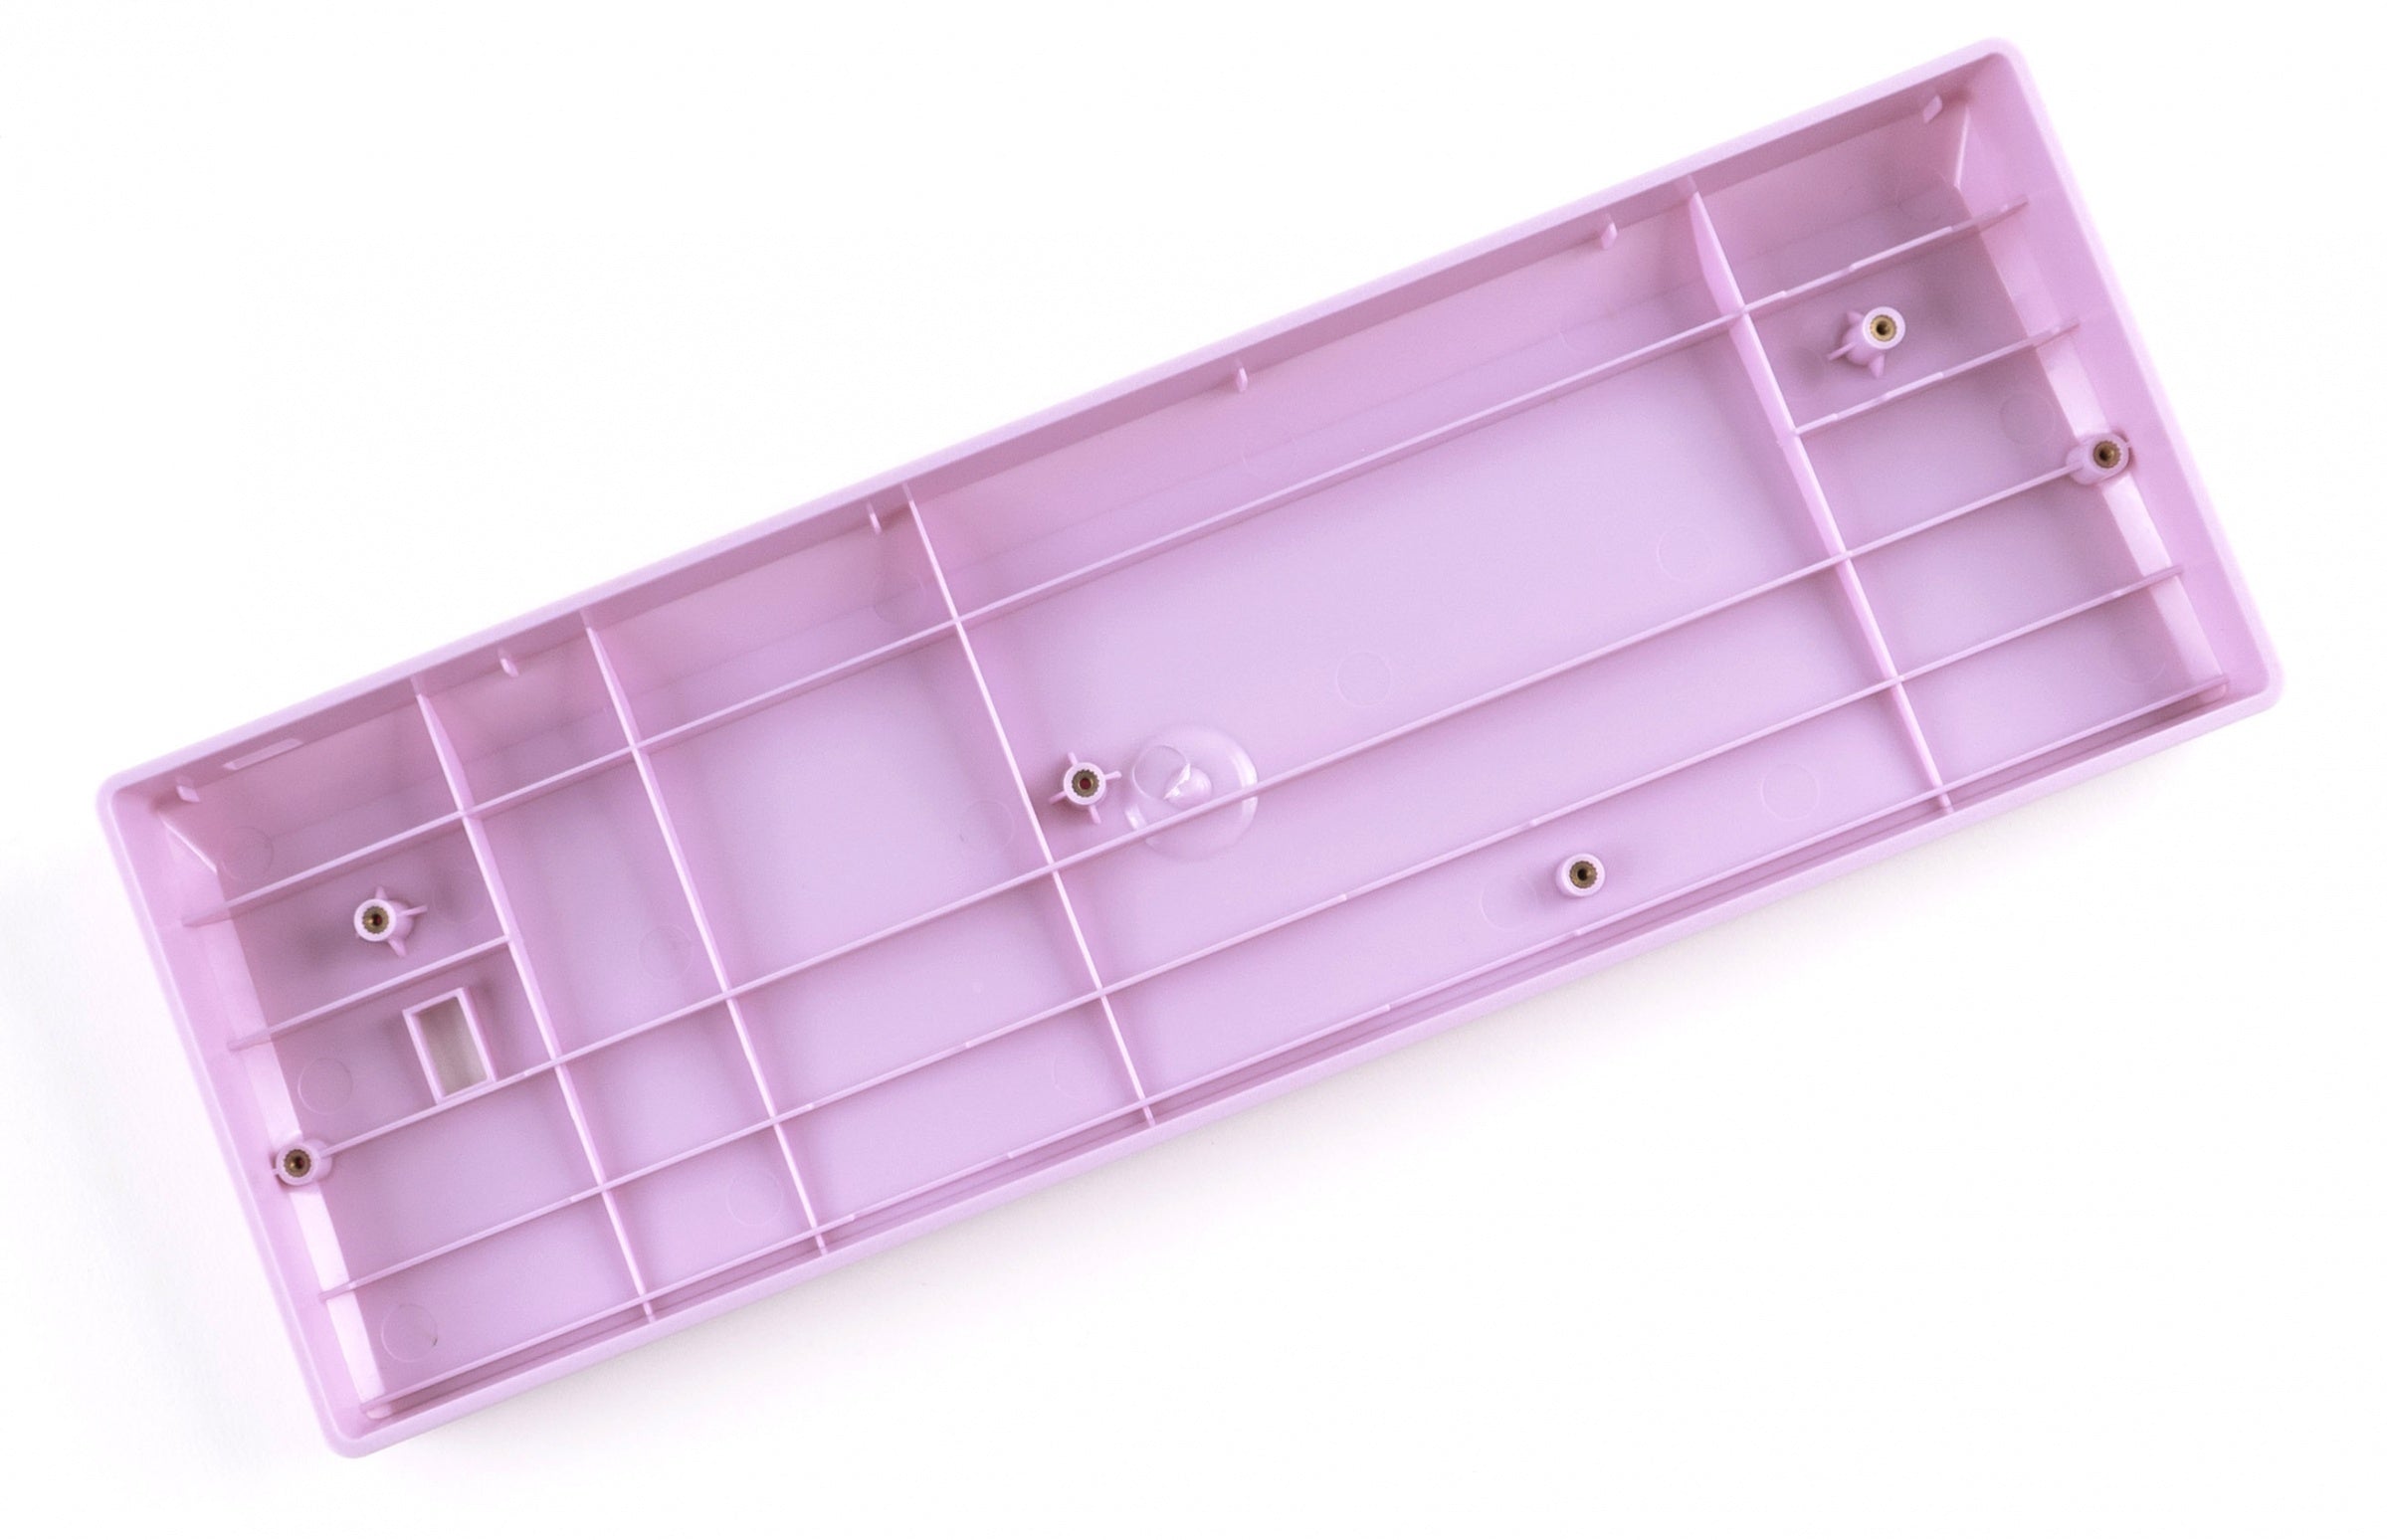 KBDFans 60% Plastic Mechanical Case Purple MKHHG9OIHP |0|